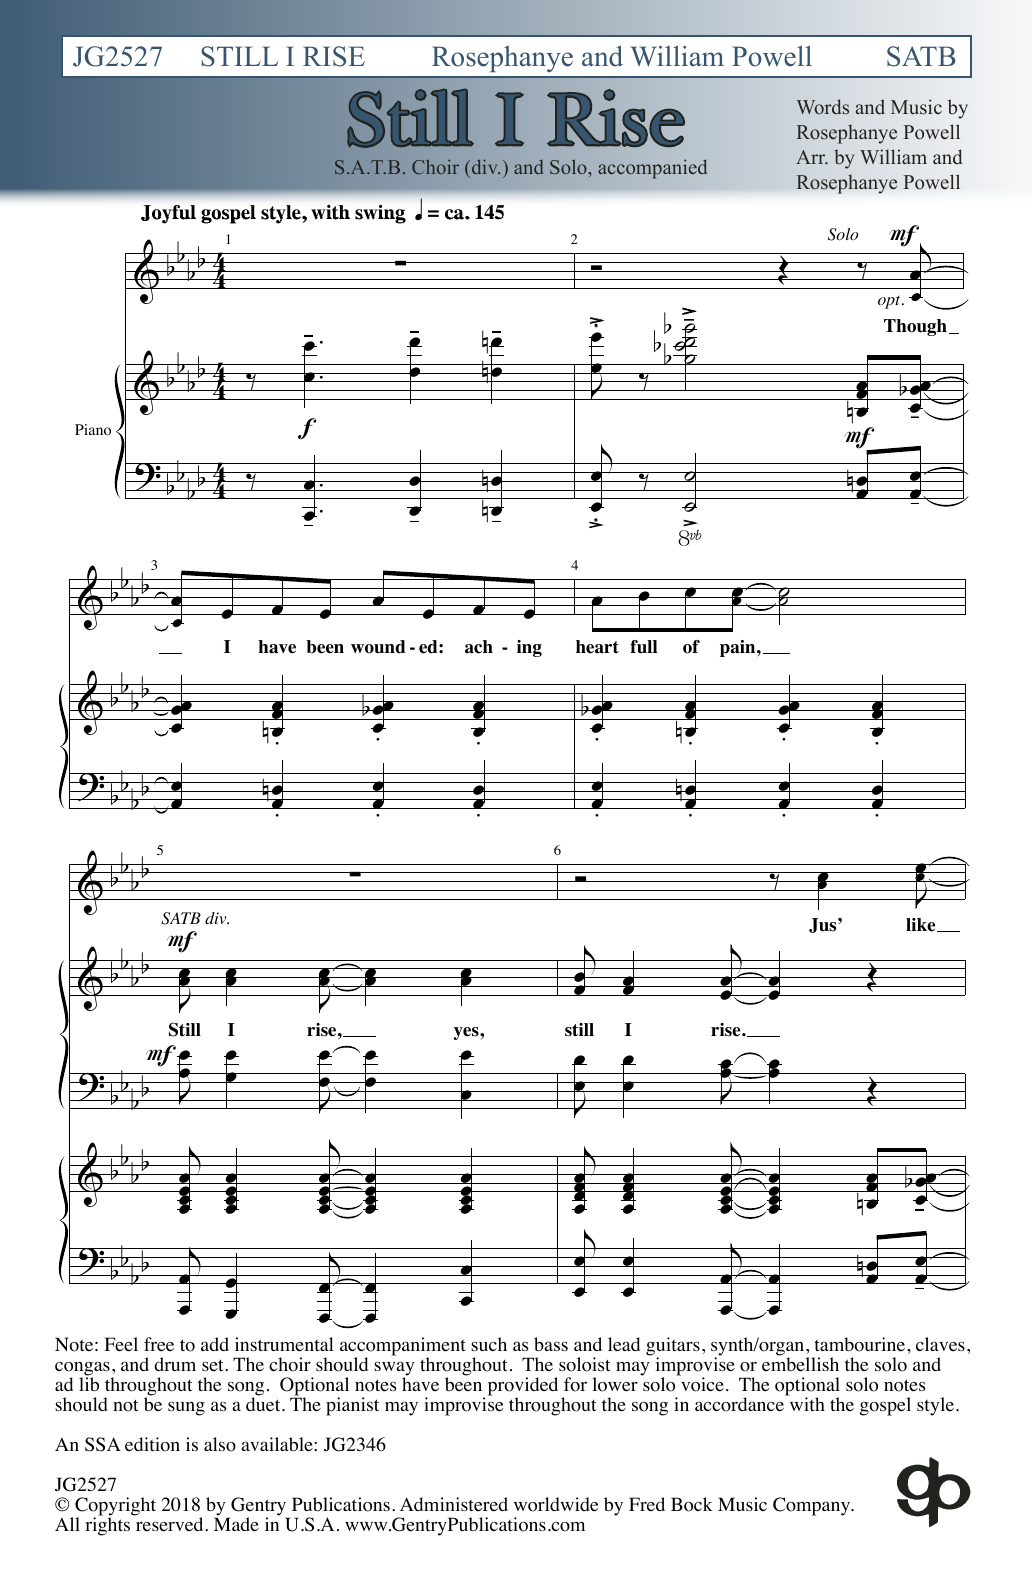 Rosephanye Powell Still I Rise (arr. William and Rosephanye Powell) sheet music notes and chords arranged for SATB Choir